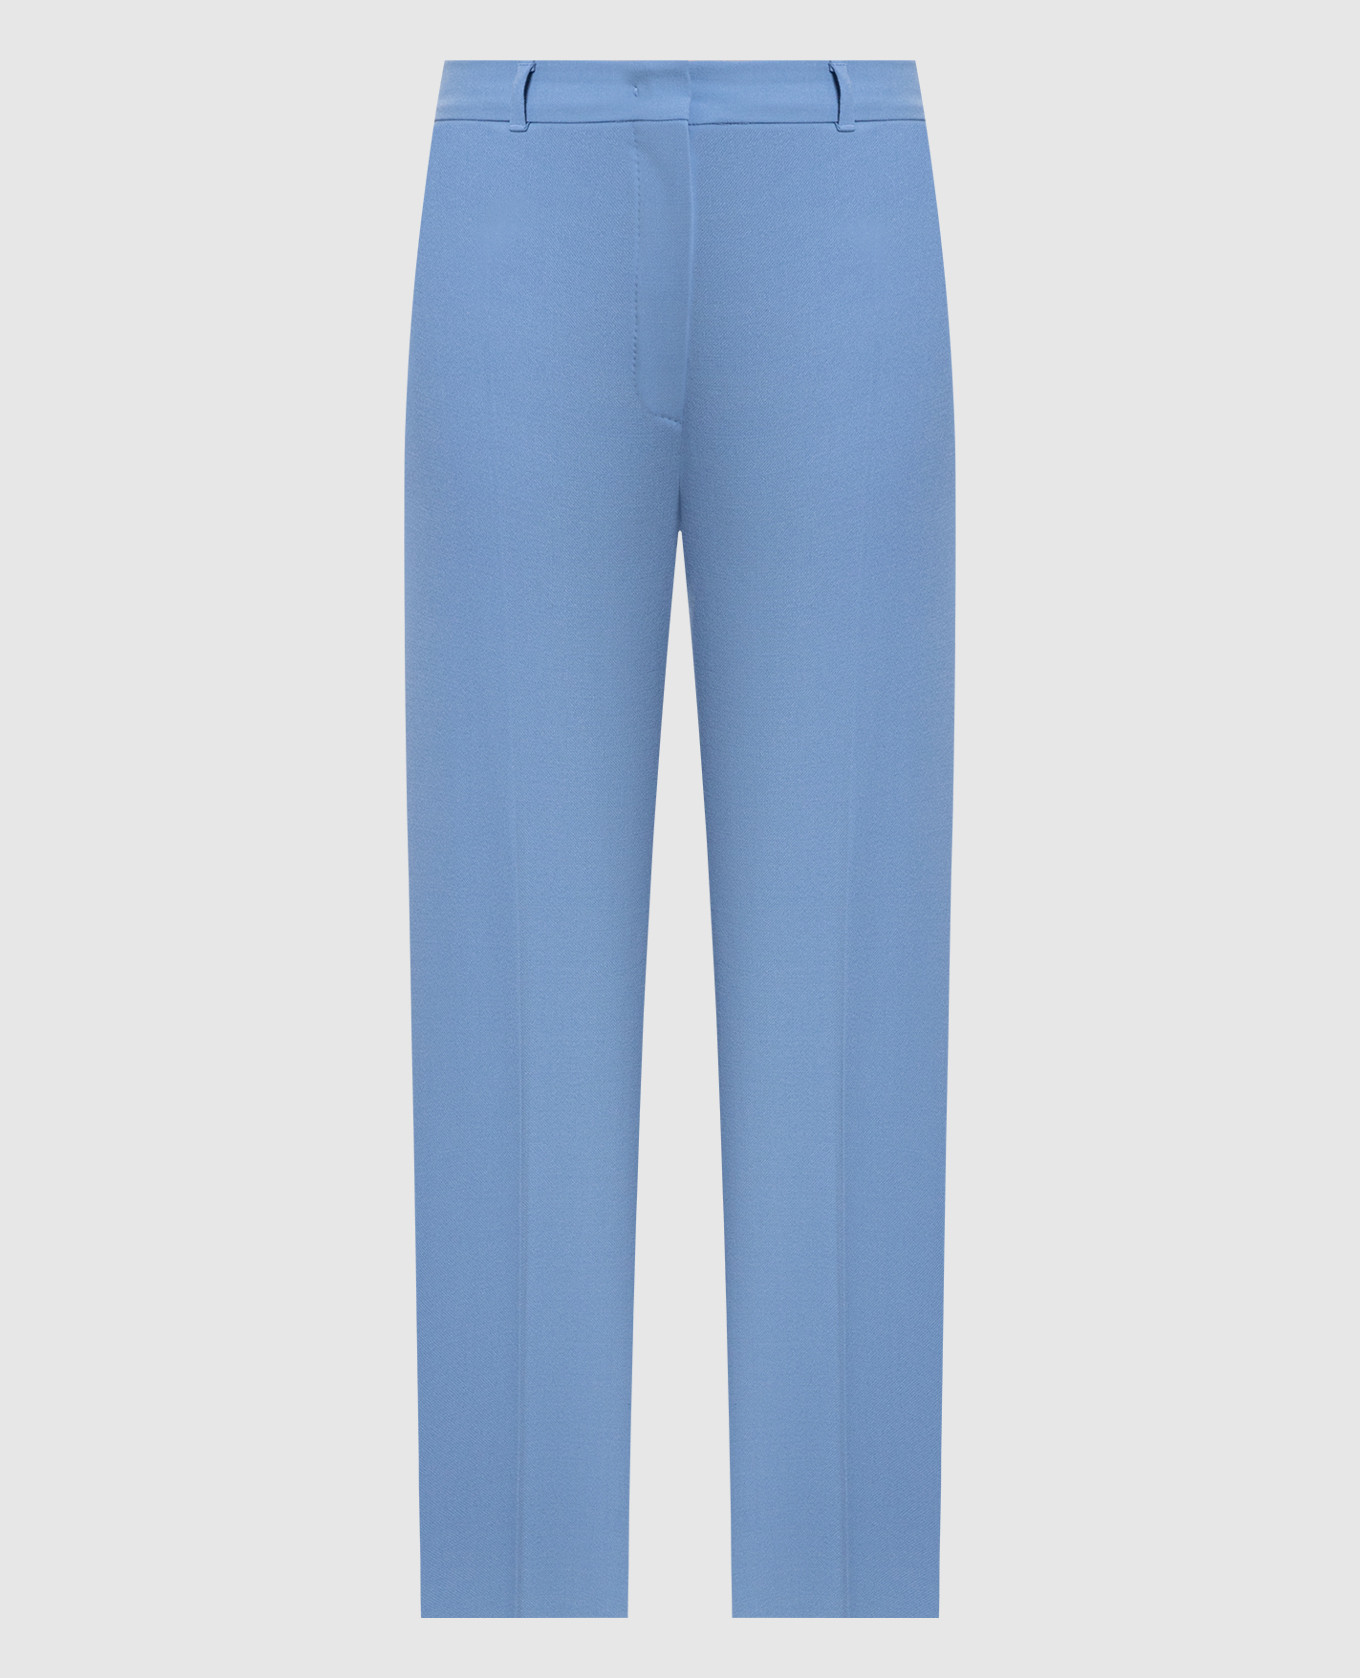 Agami wool blue pants